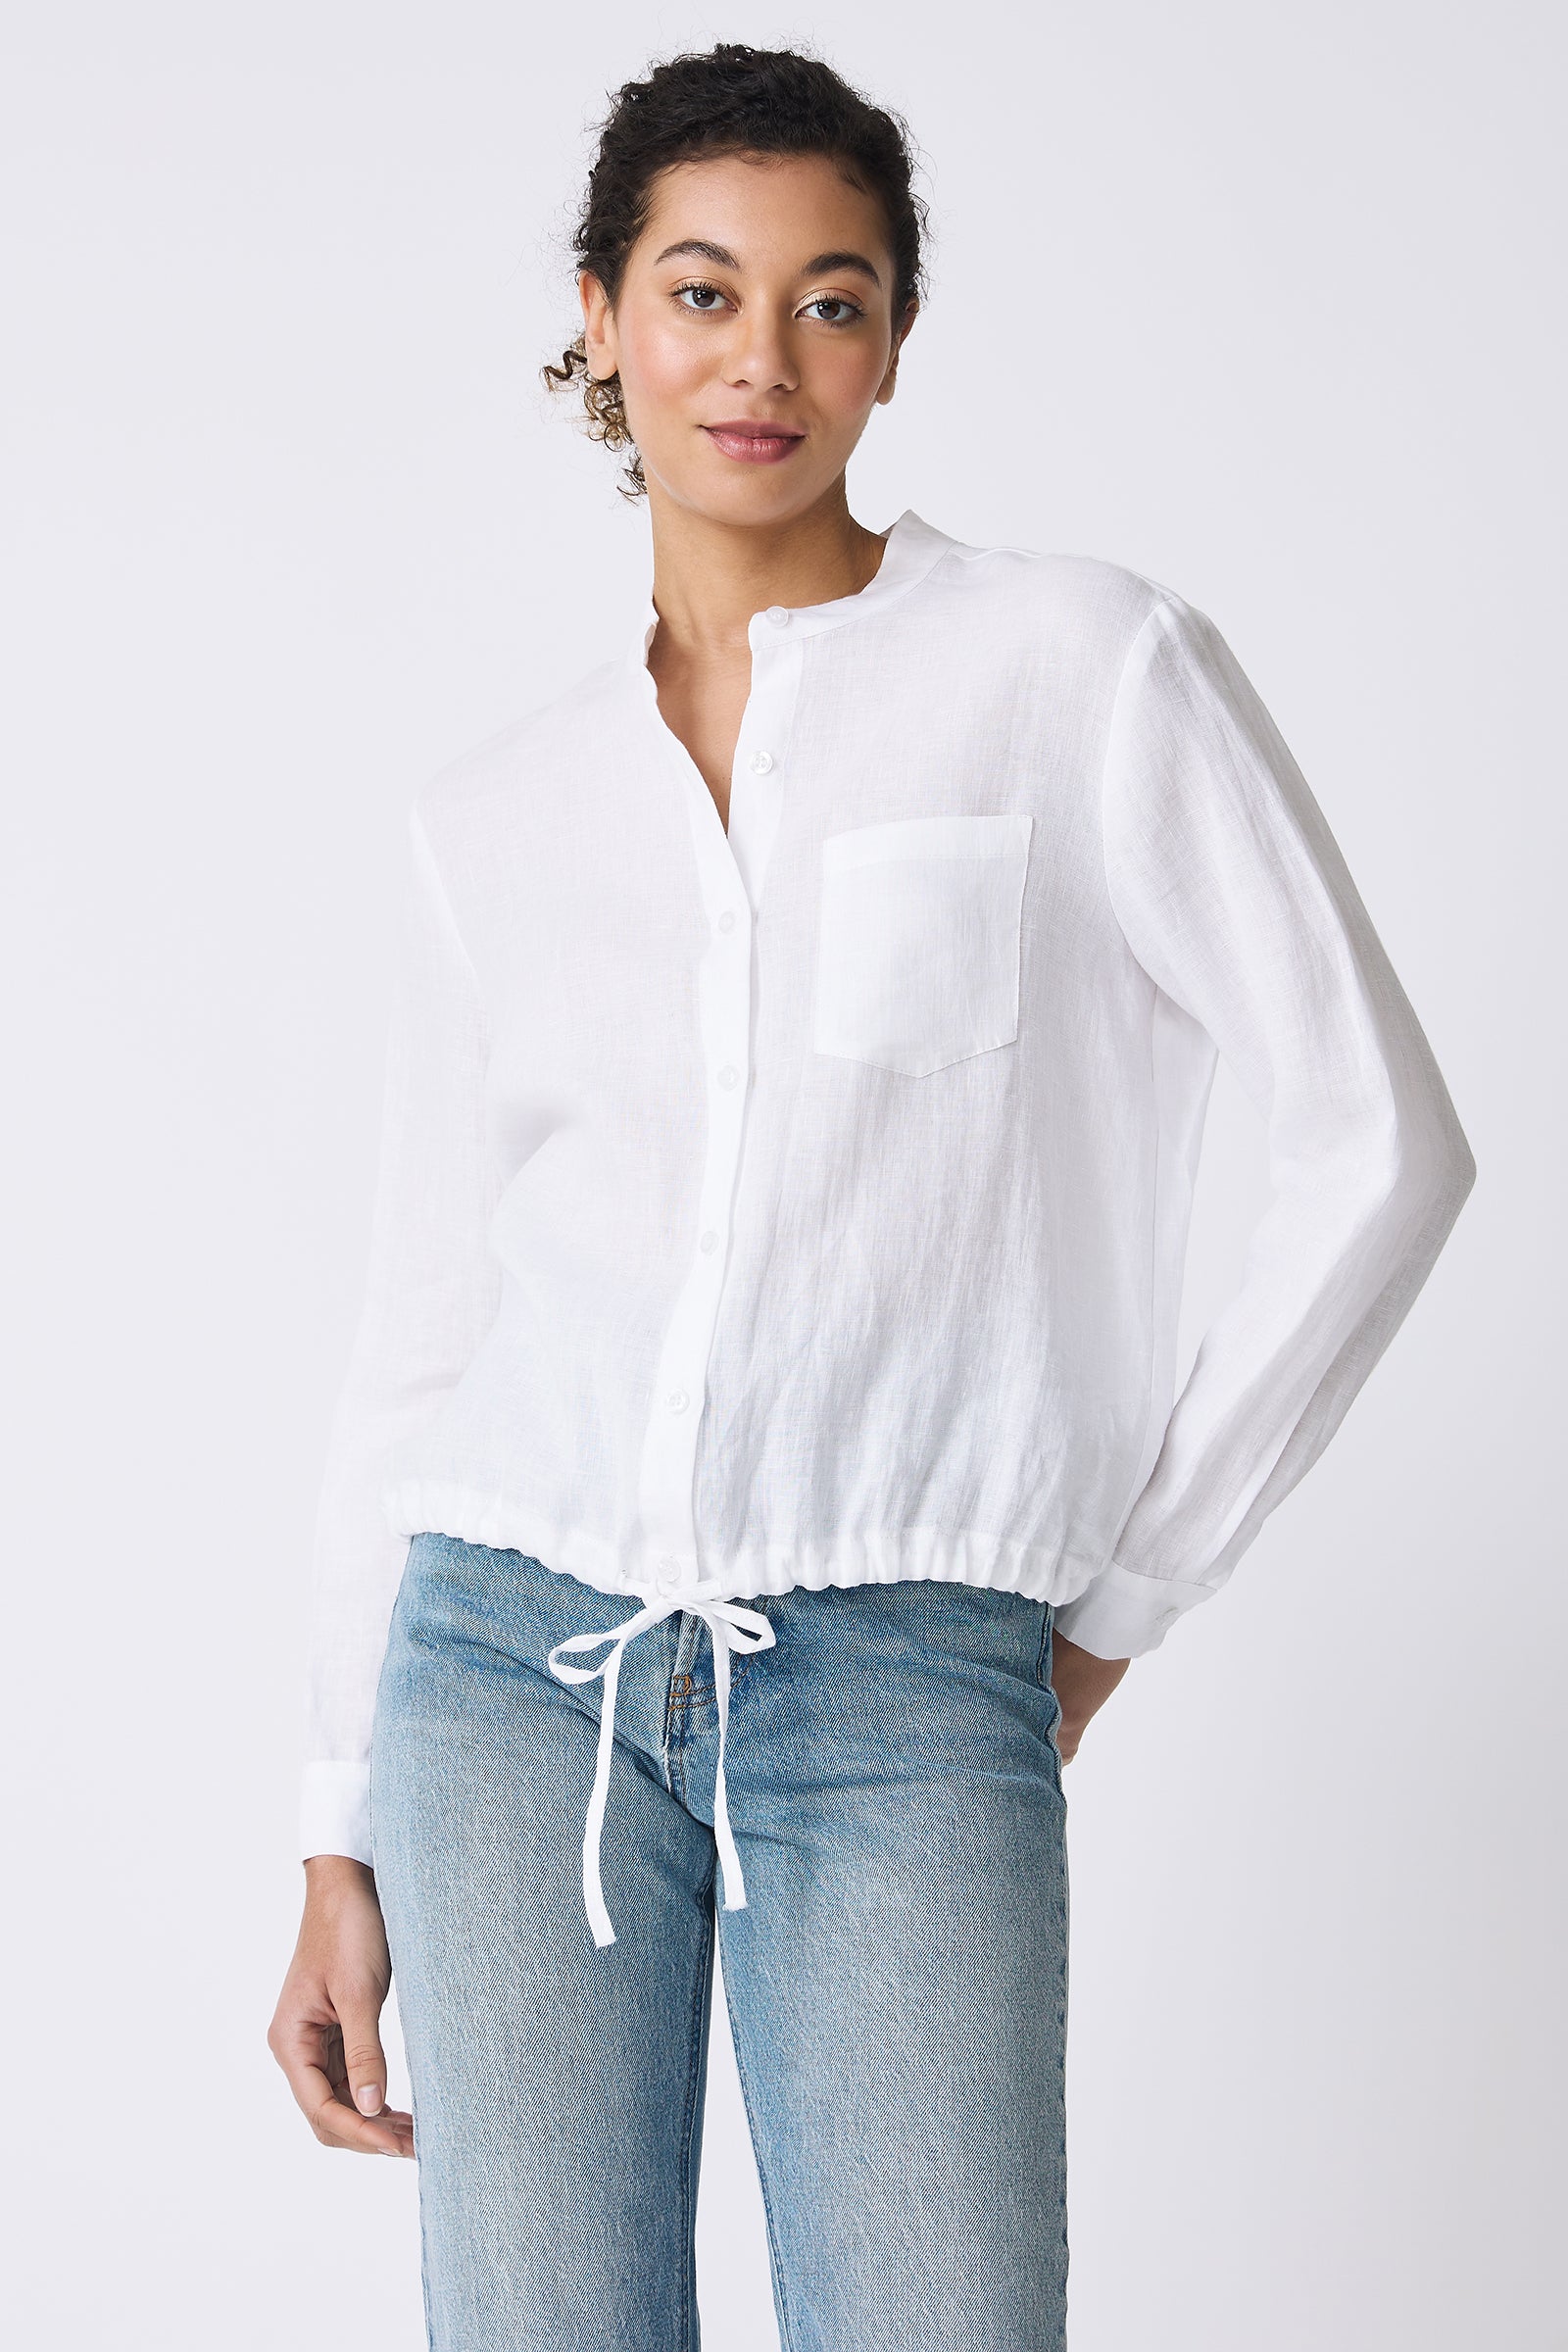 Kal Rieman Ella Drawstring Shirt in White on model front view